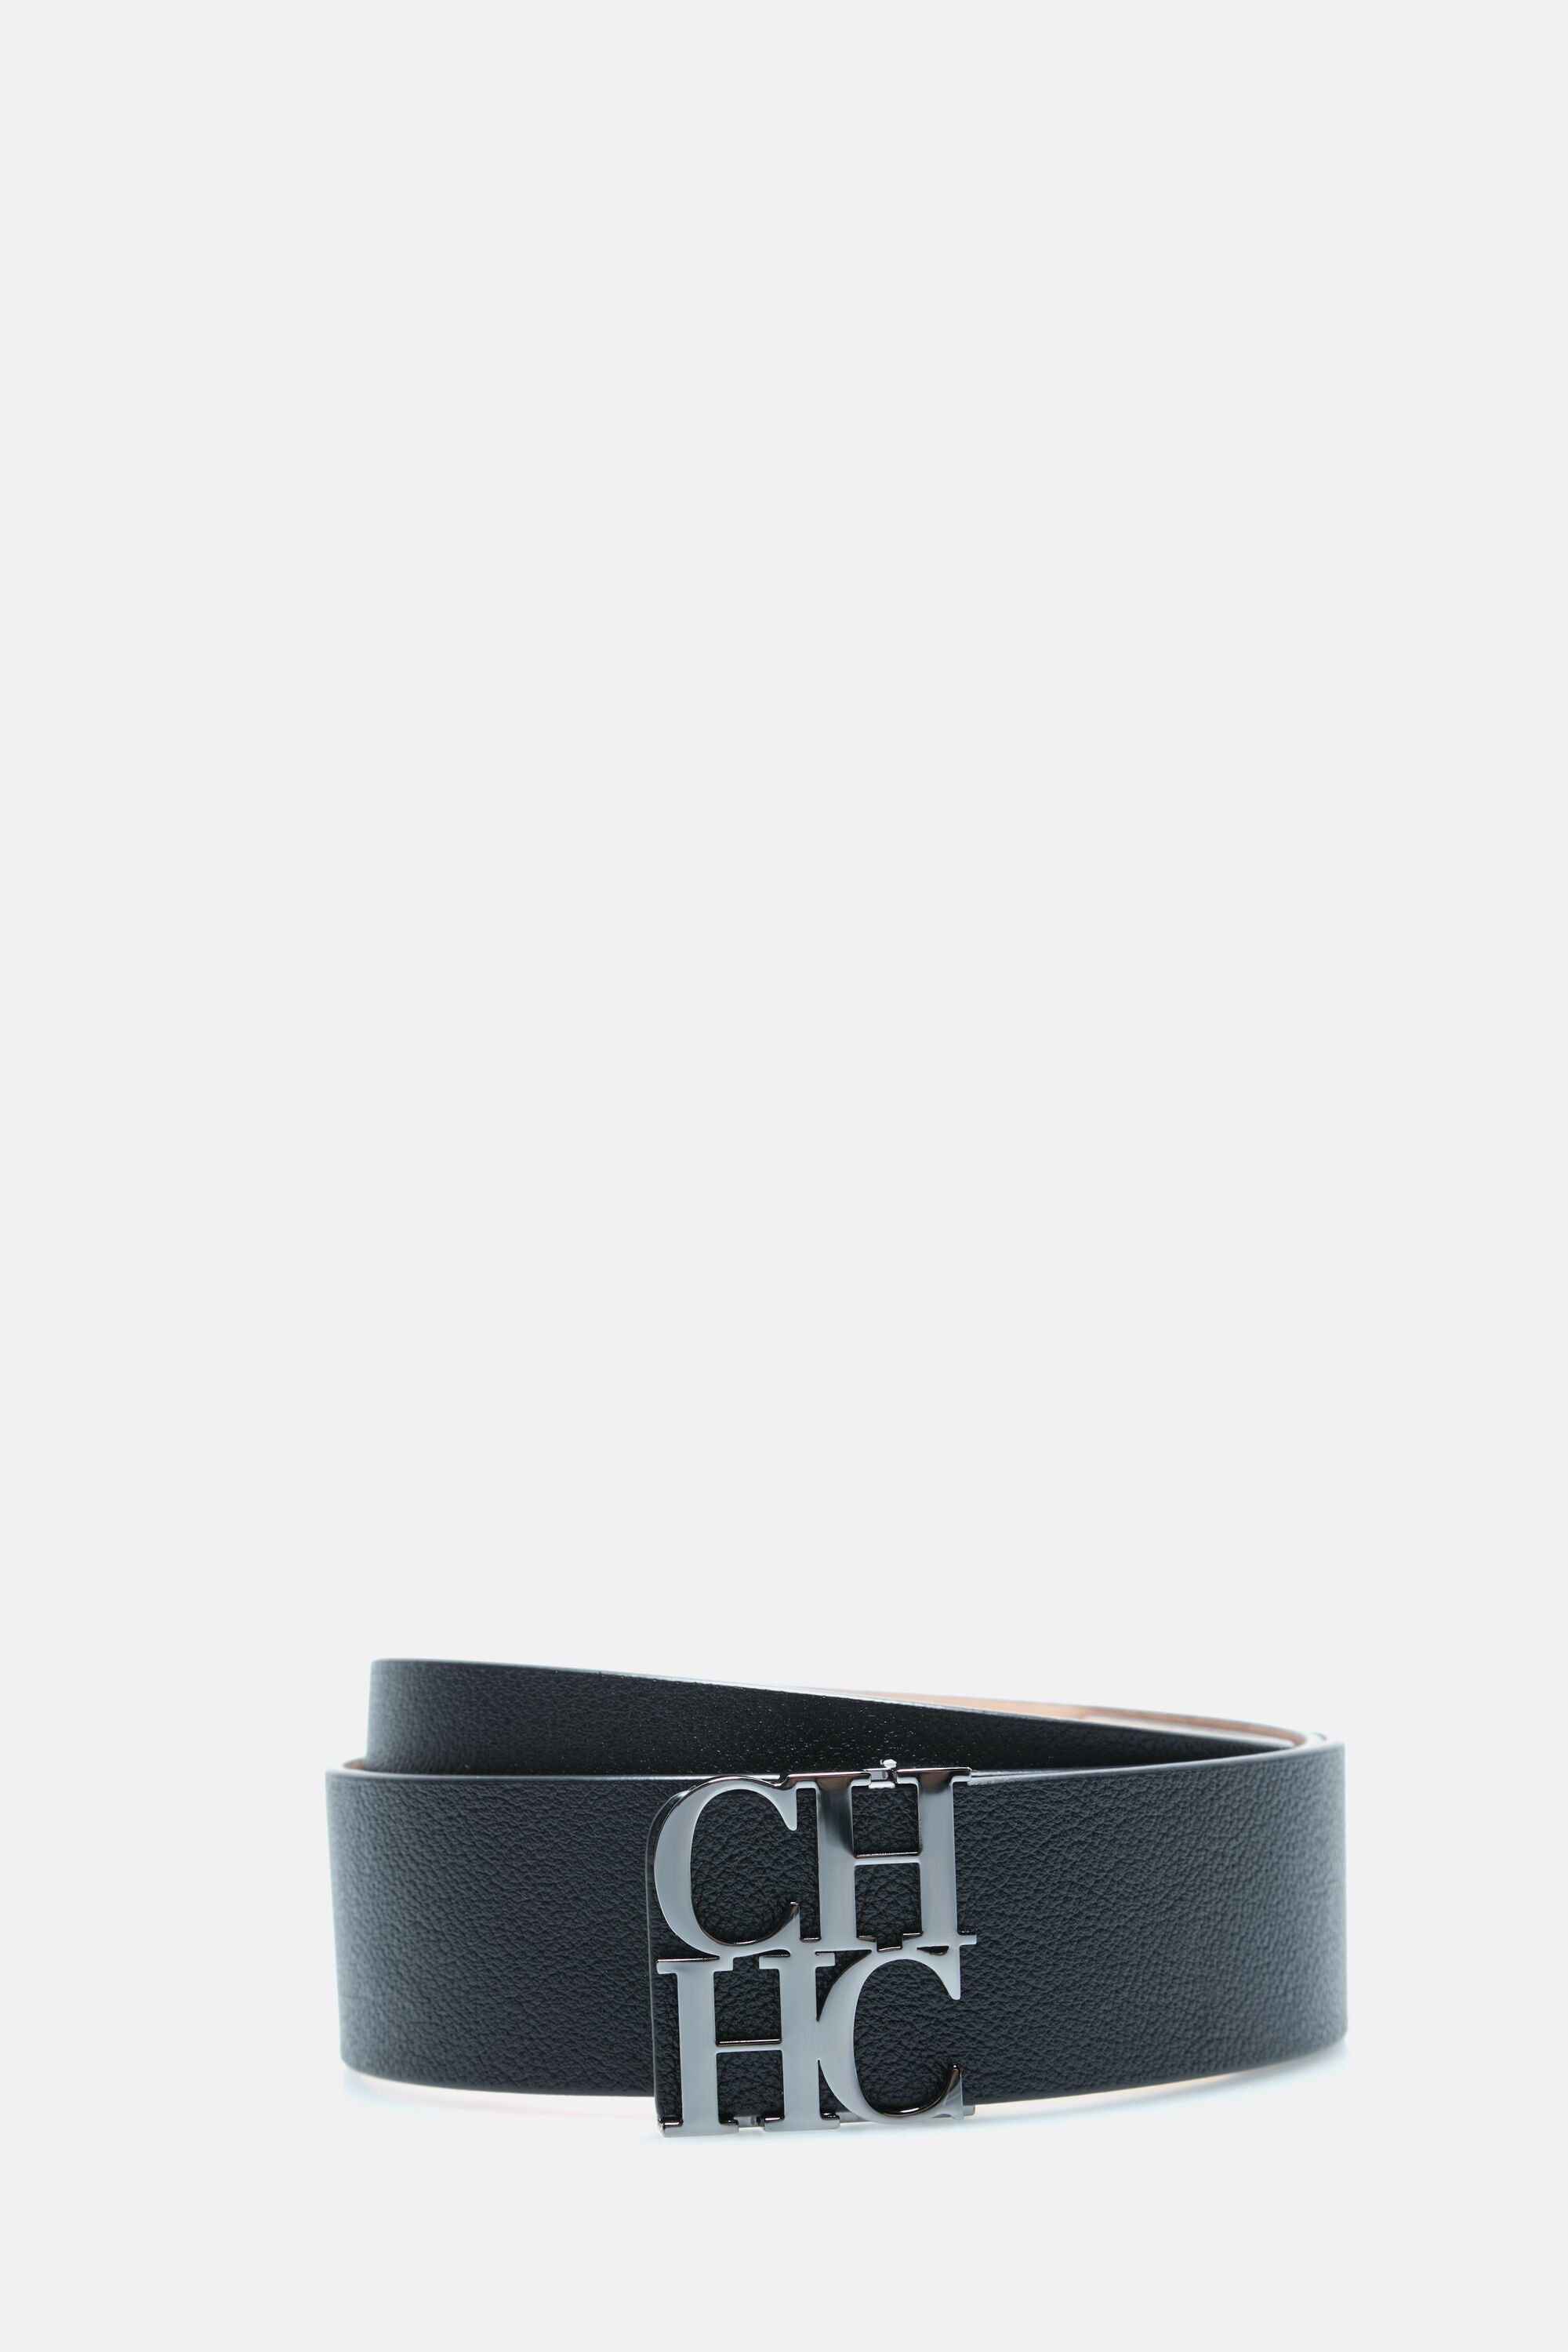 rosado mini chorro CHHC | Cinturón ancho negro - CH Carolina Herrera México